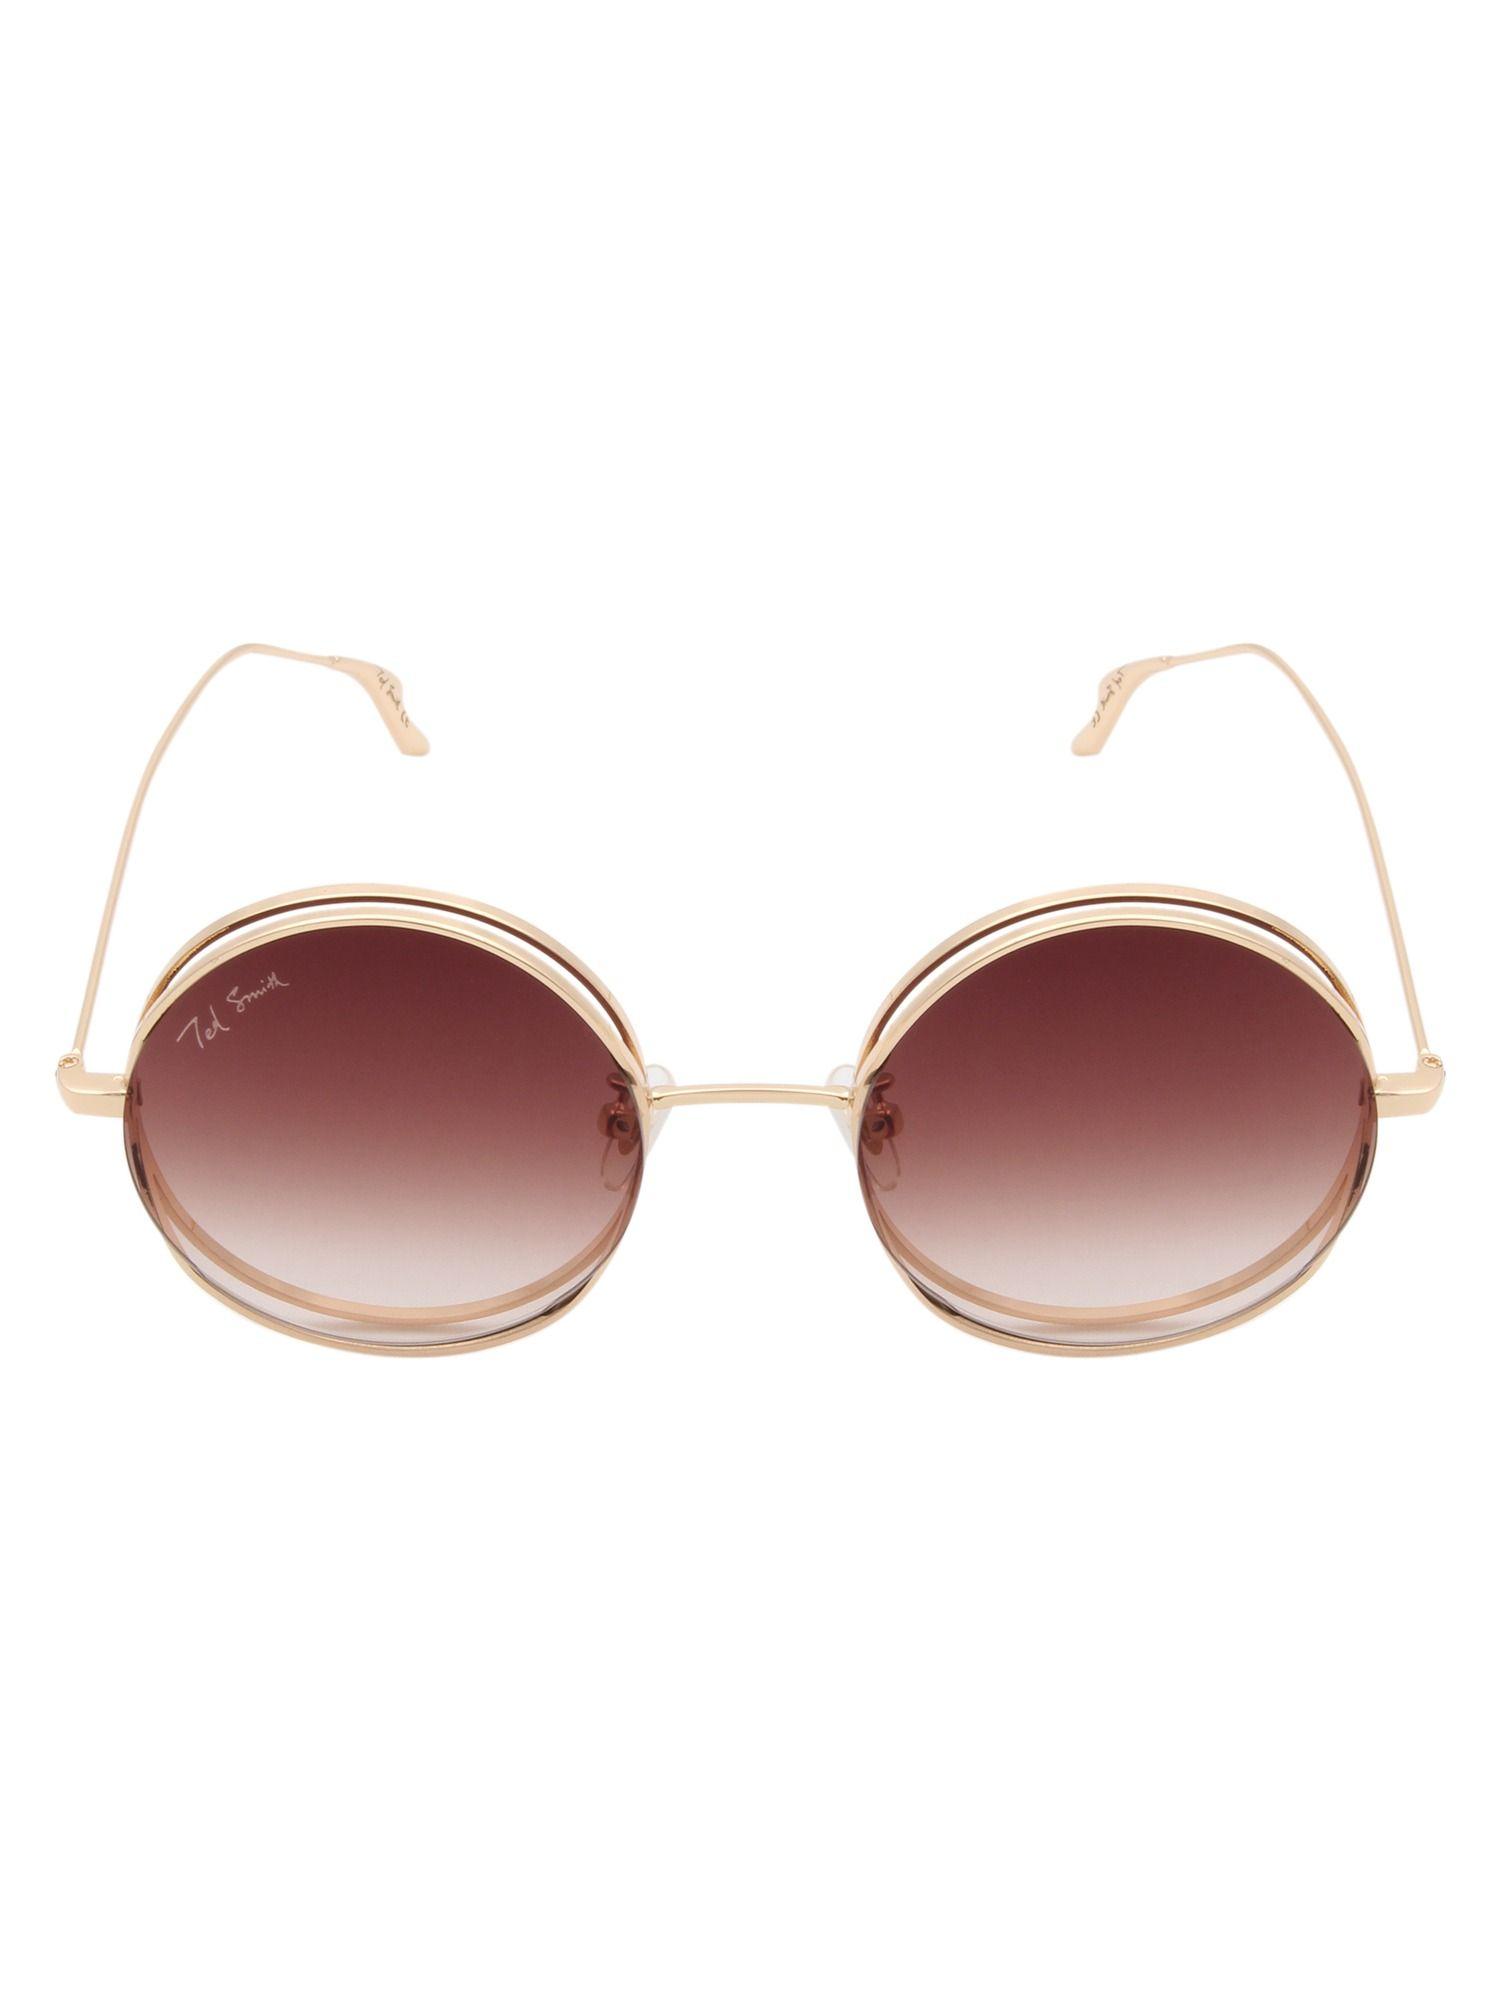 round sunglasses in rose gold frame twornd for men & women